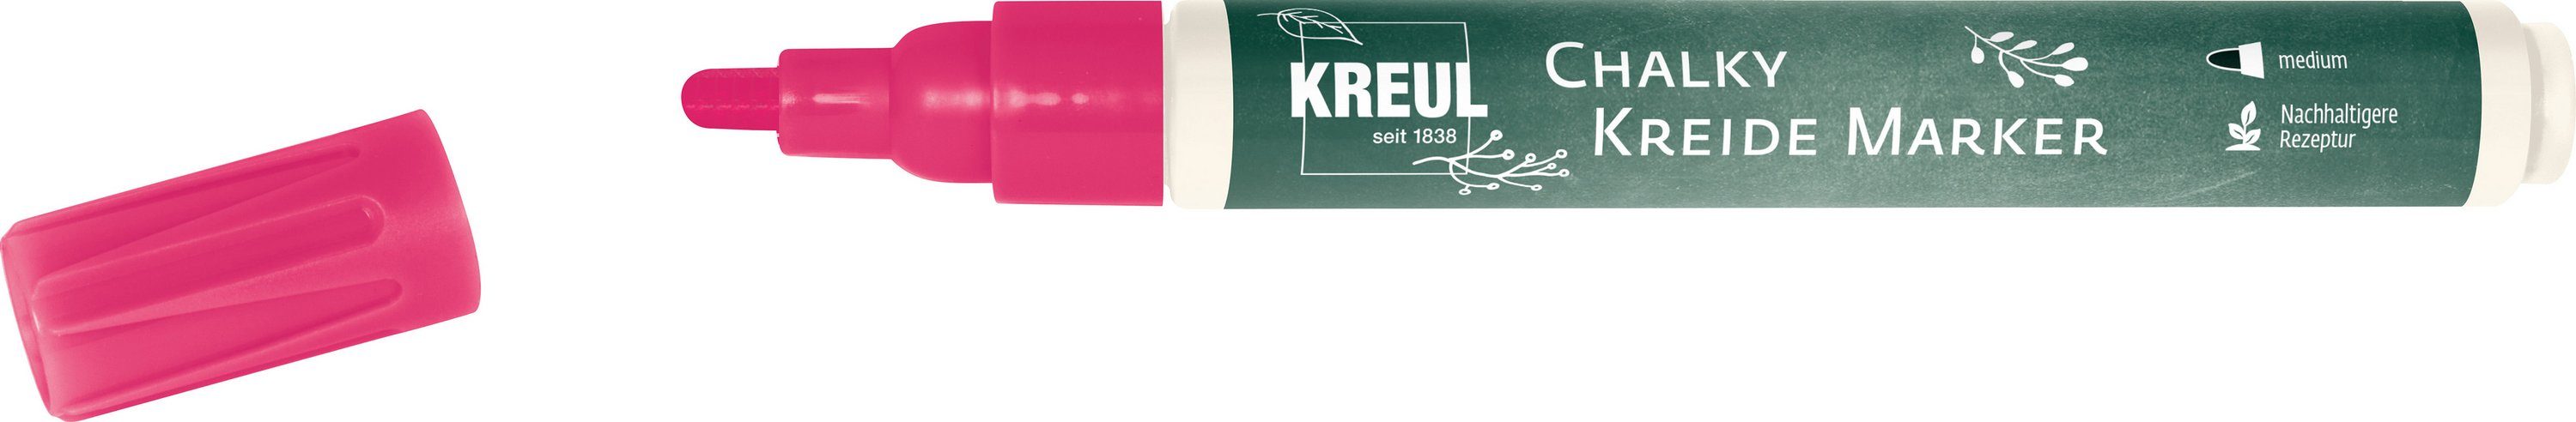 Kreul Kreidemarker Chalky, 2-3mm Strichstärke Neon-Pink